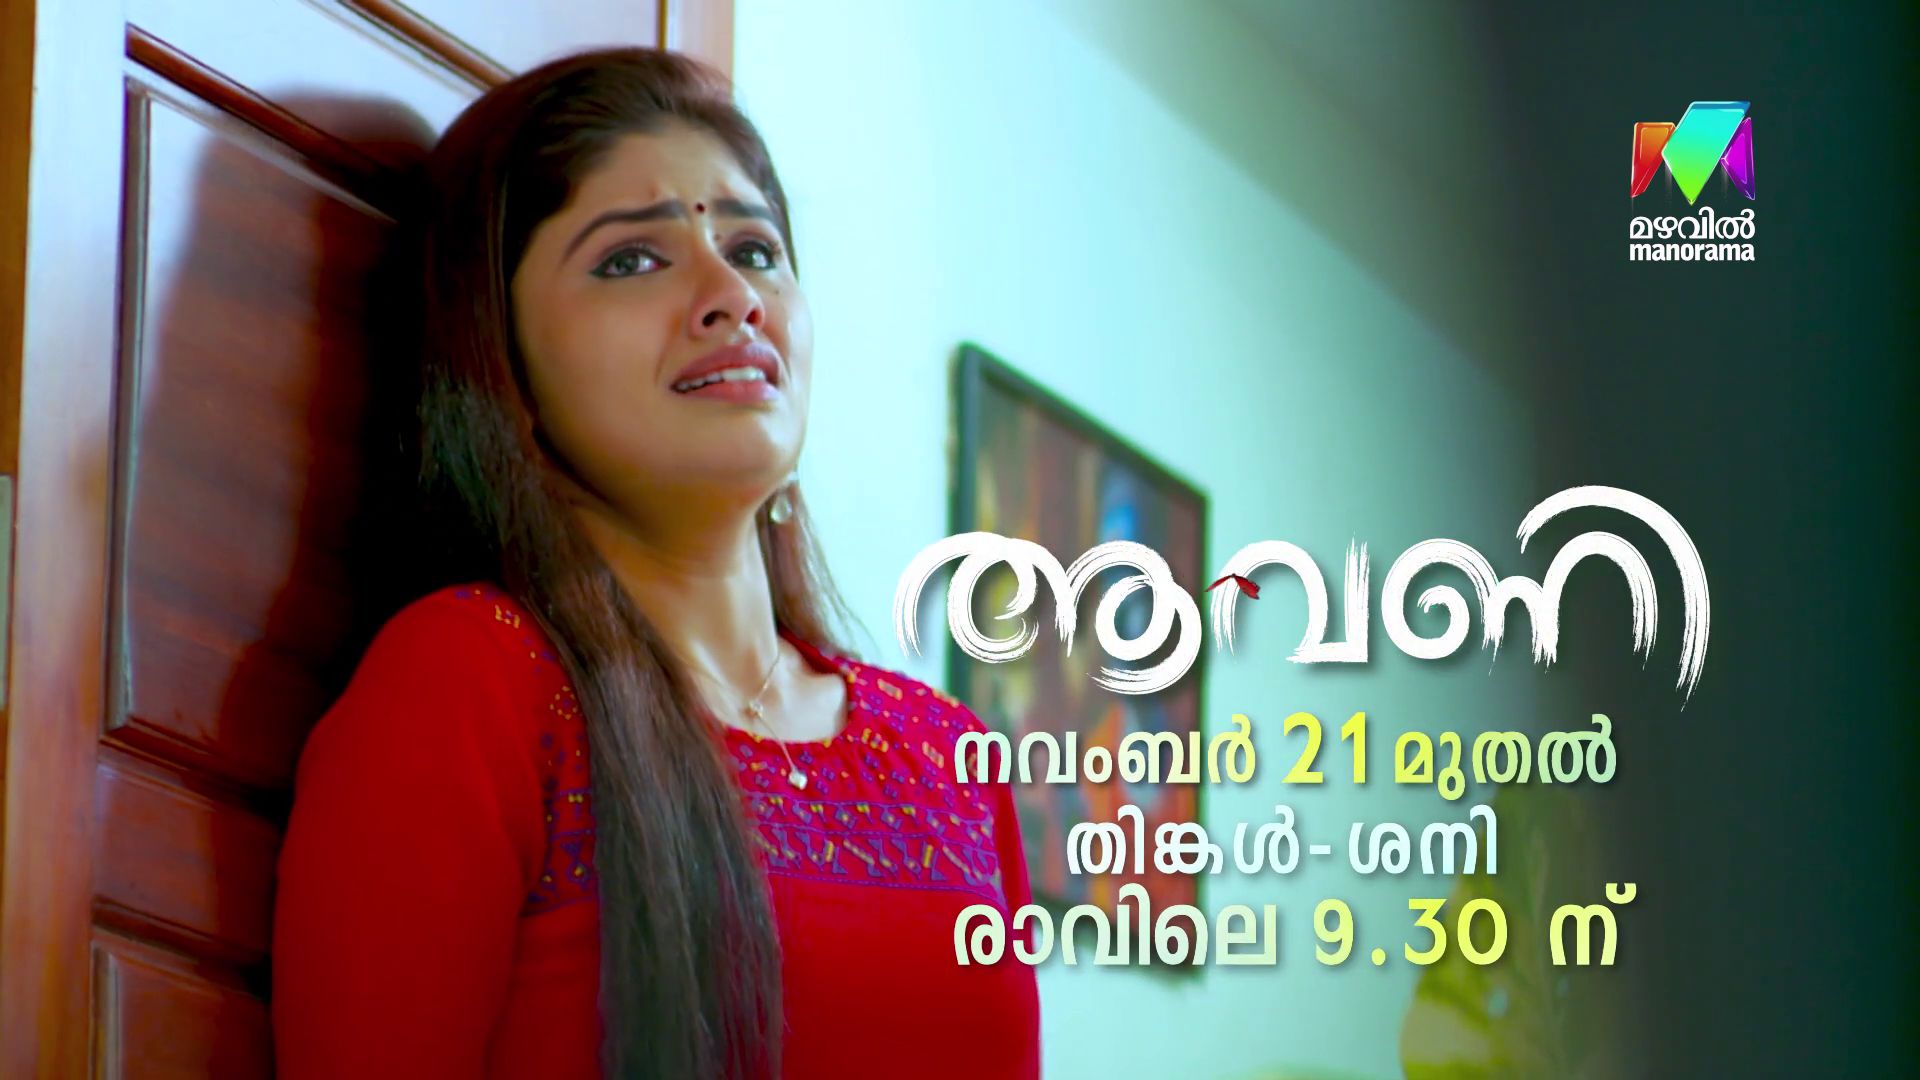 King Liar Malayalam Movie Satellite Rights Purchased By Mazhavil Manorama 11